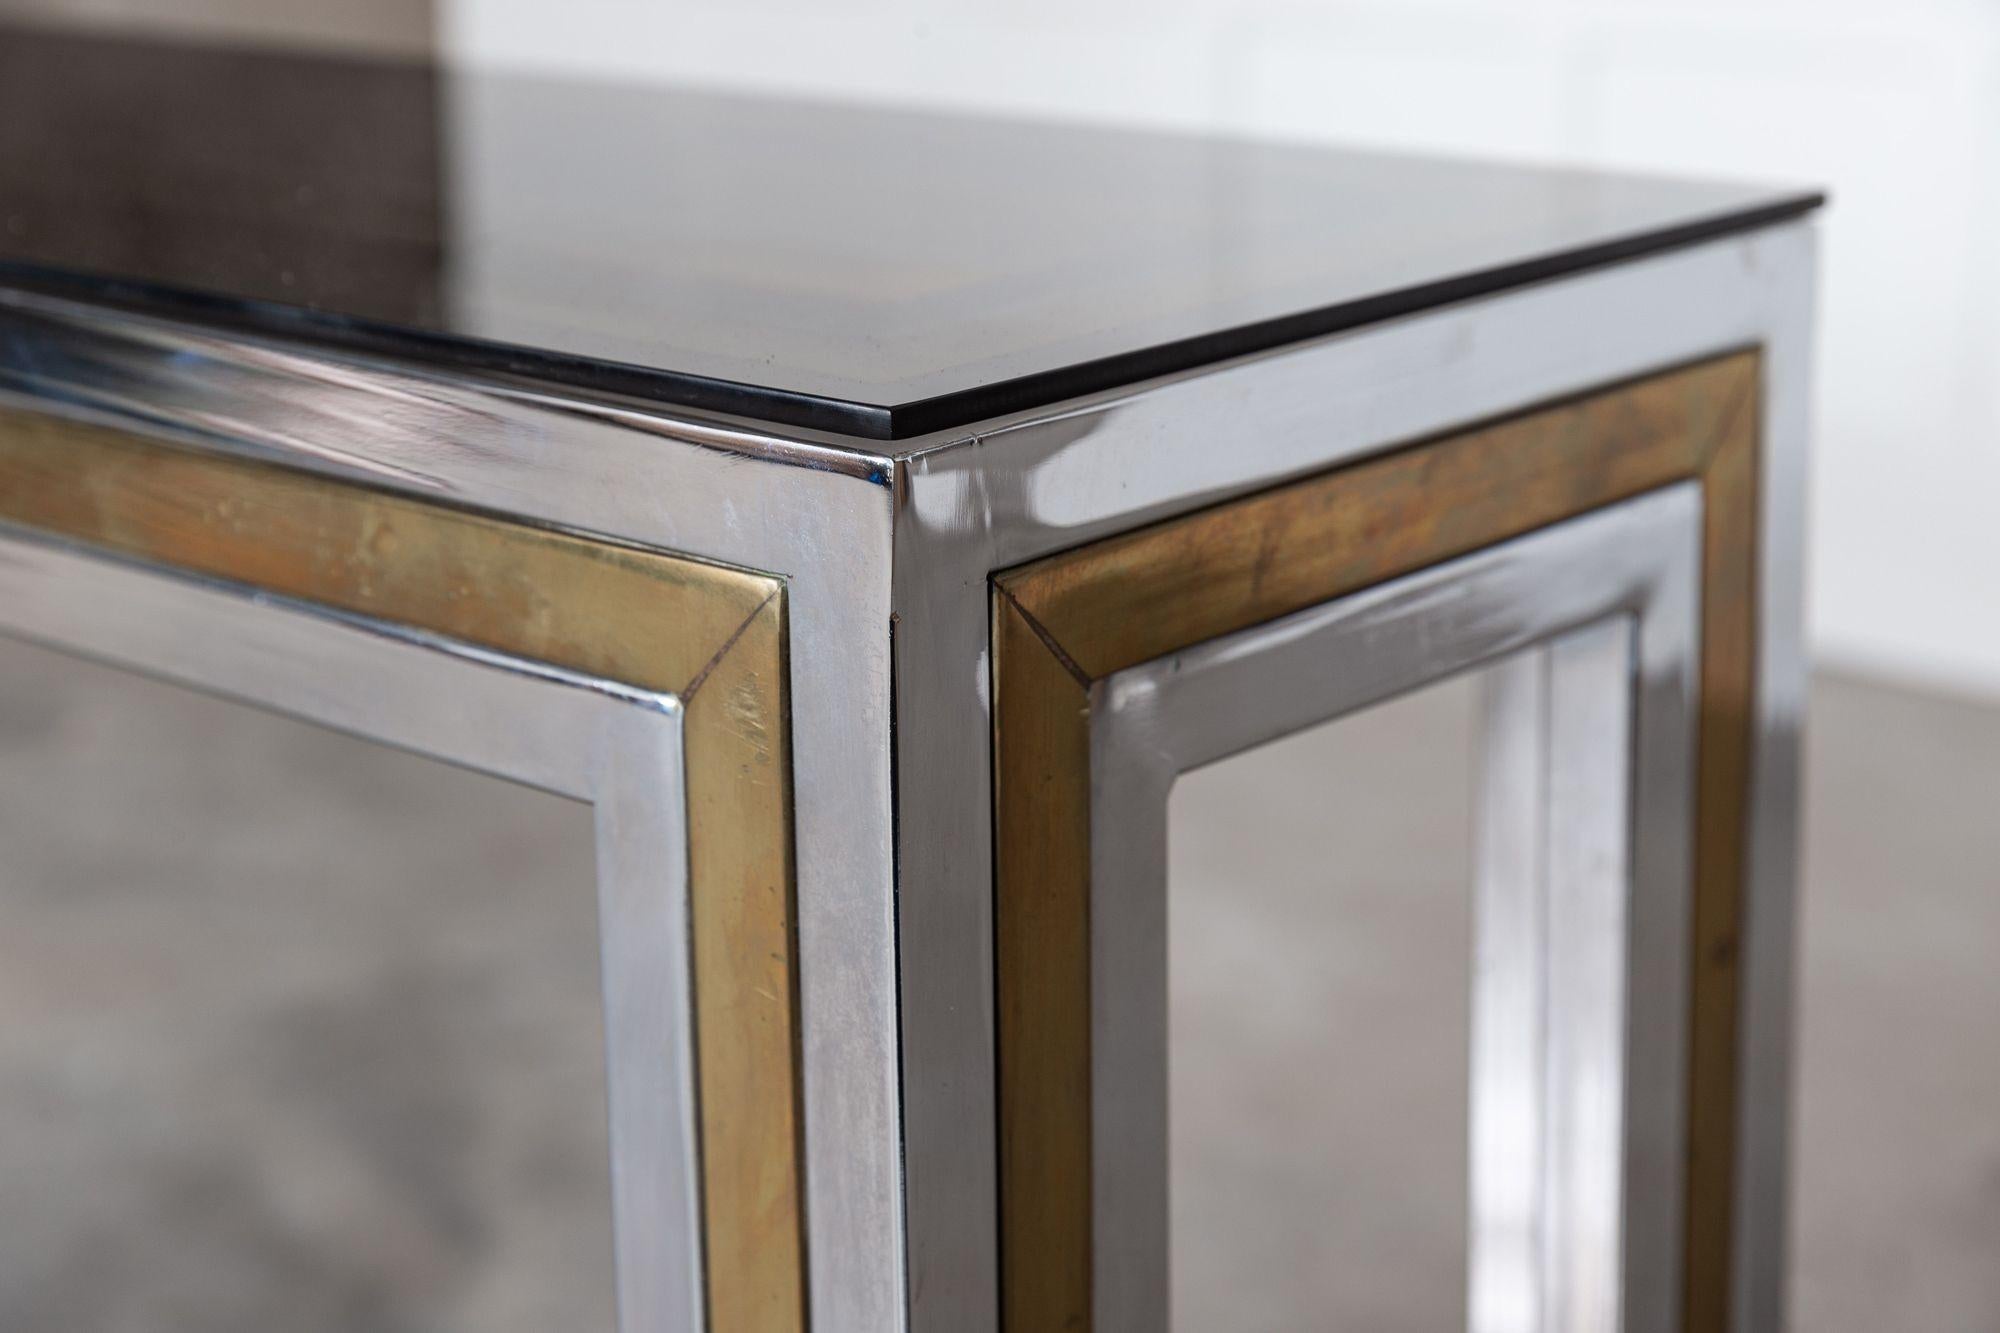 circa 1970
Italian chrome/brass glass console table
sku 1327
Measures: W91 x D30 x H75 cm.